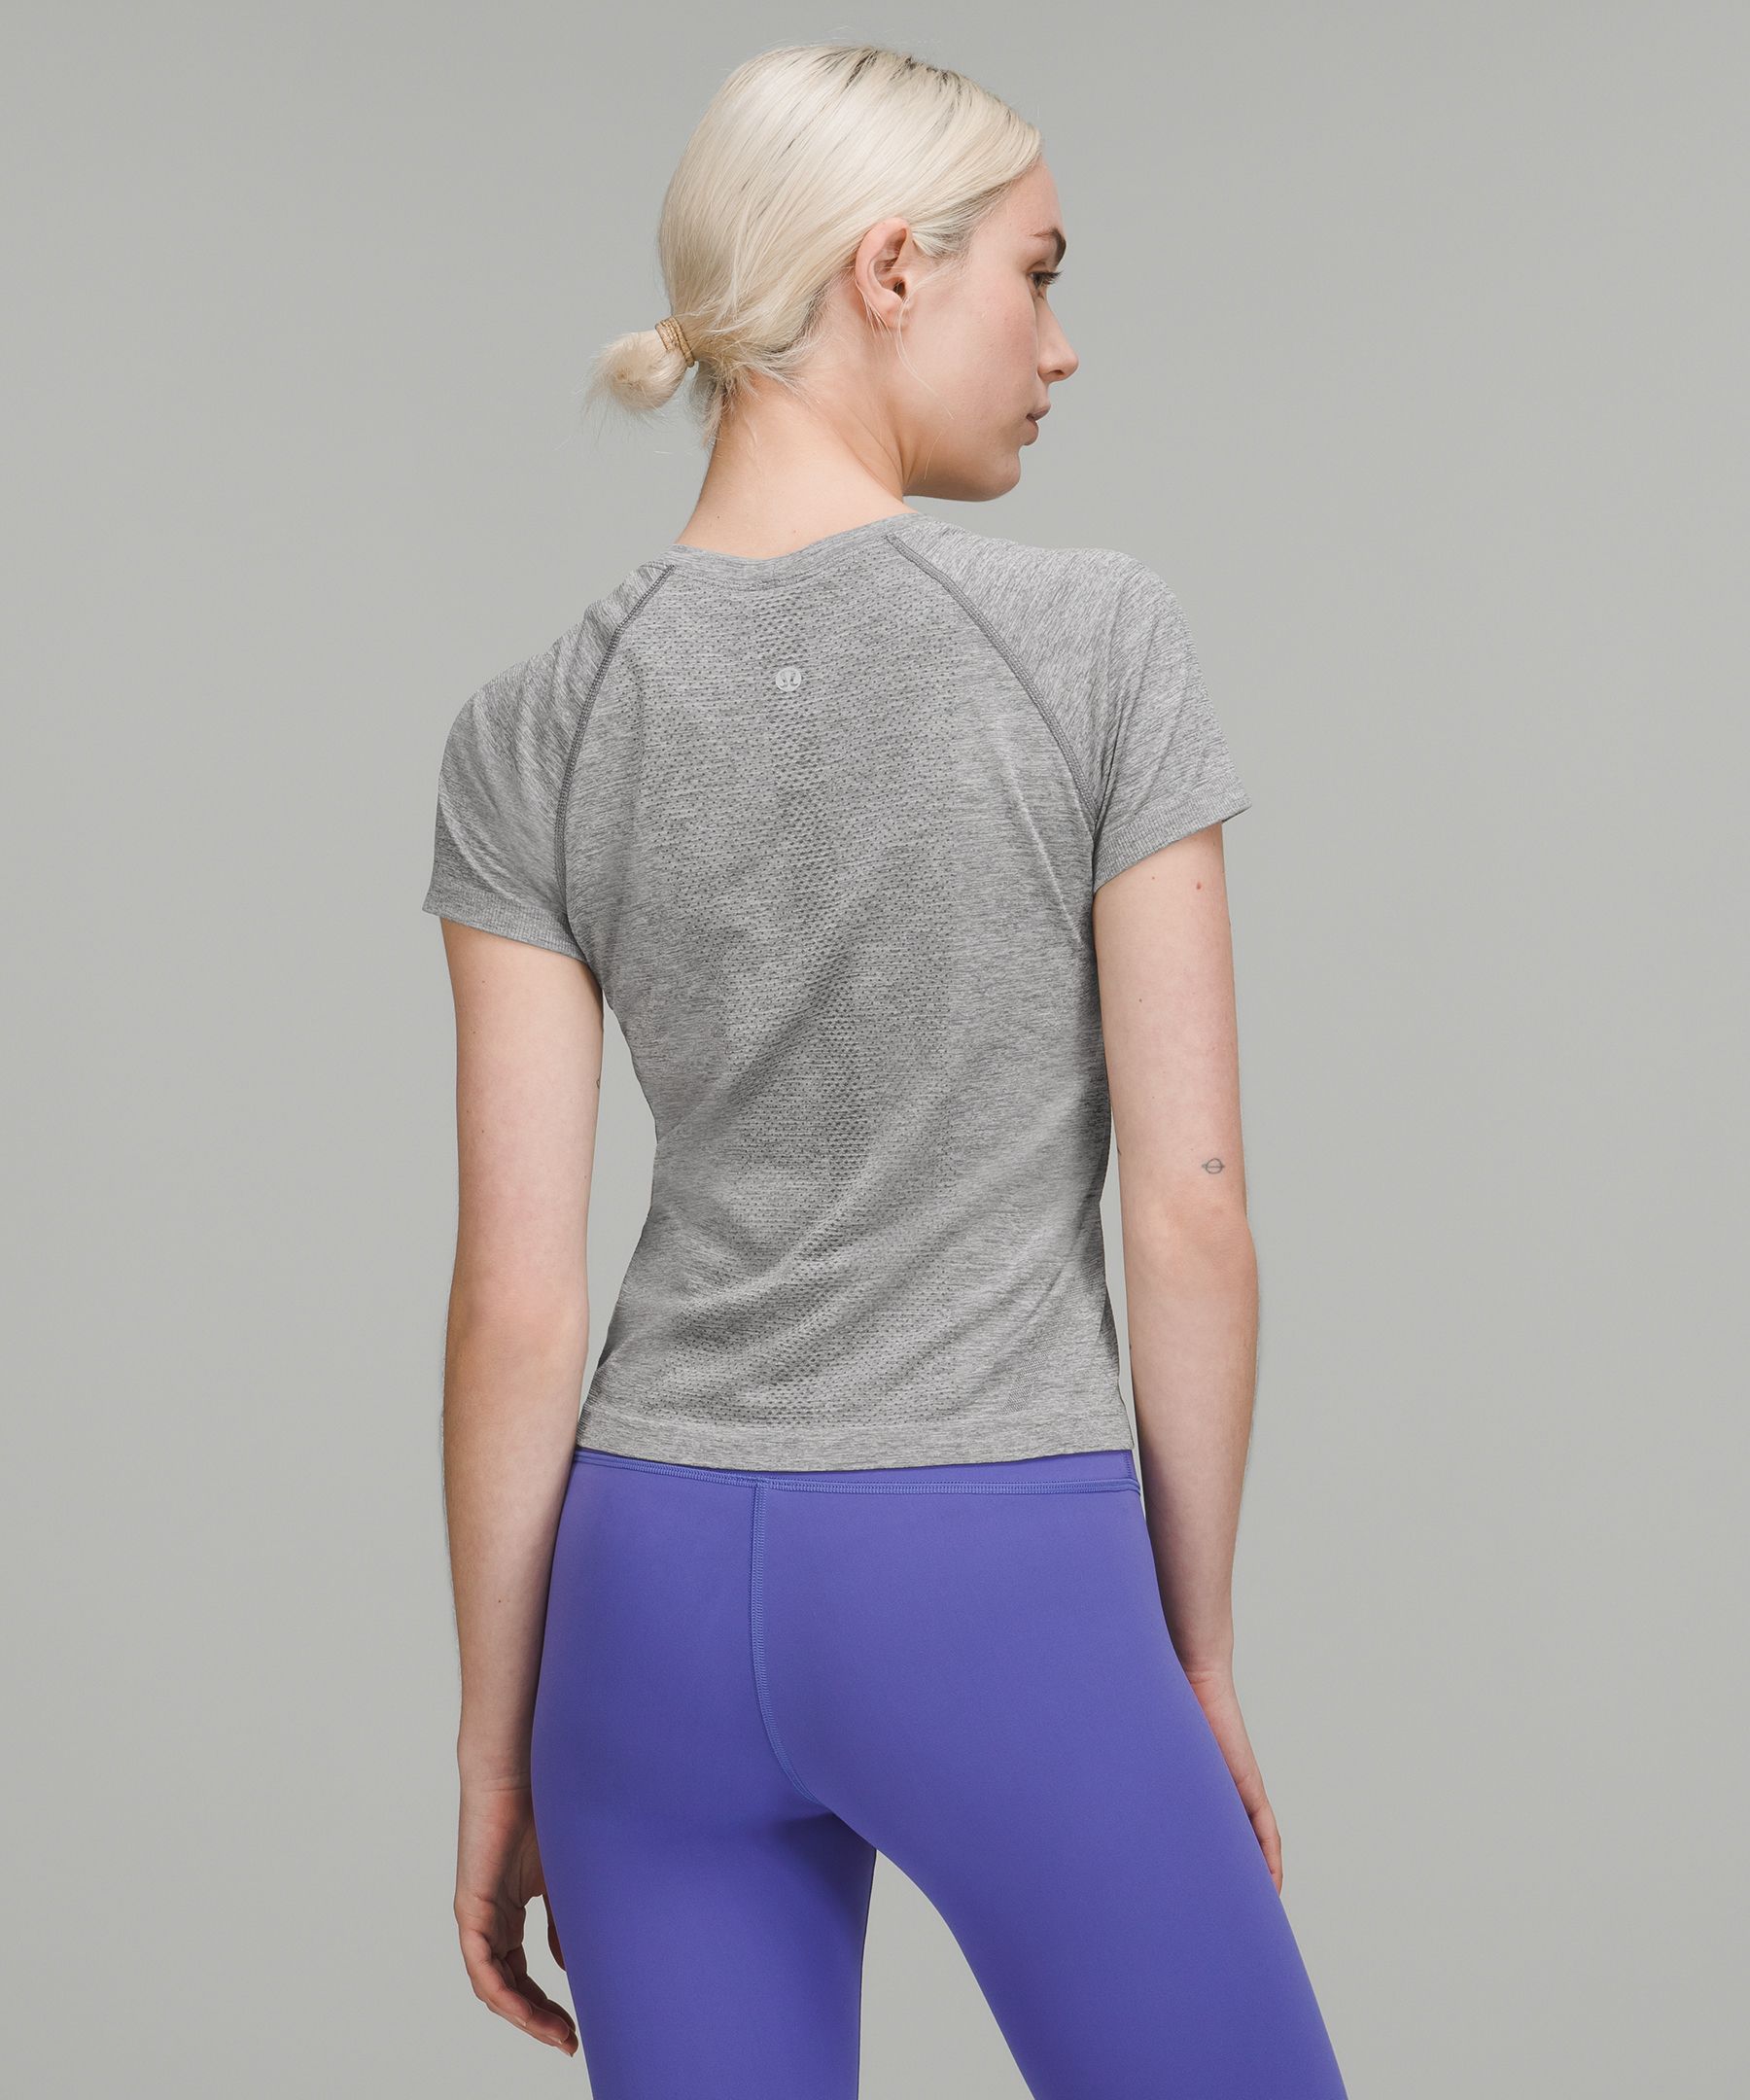 Swiftly Tech Short-Sleeve Shirt 2.0 *Race Length | Women's Short 